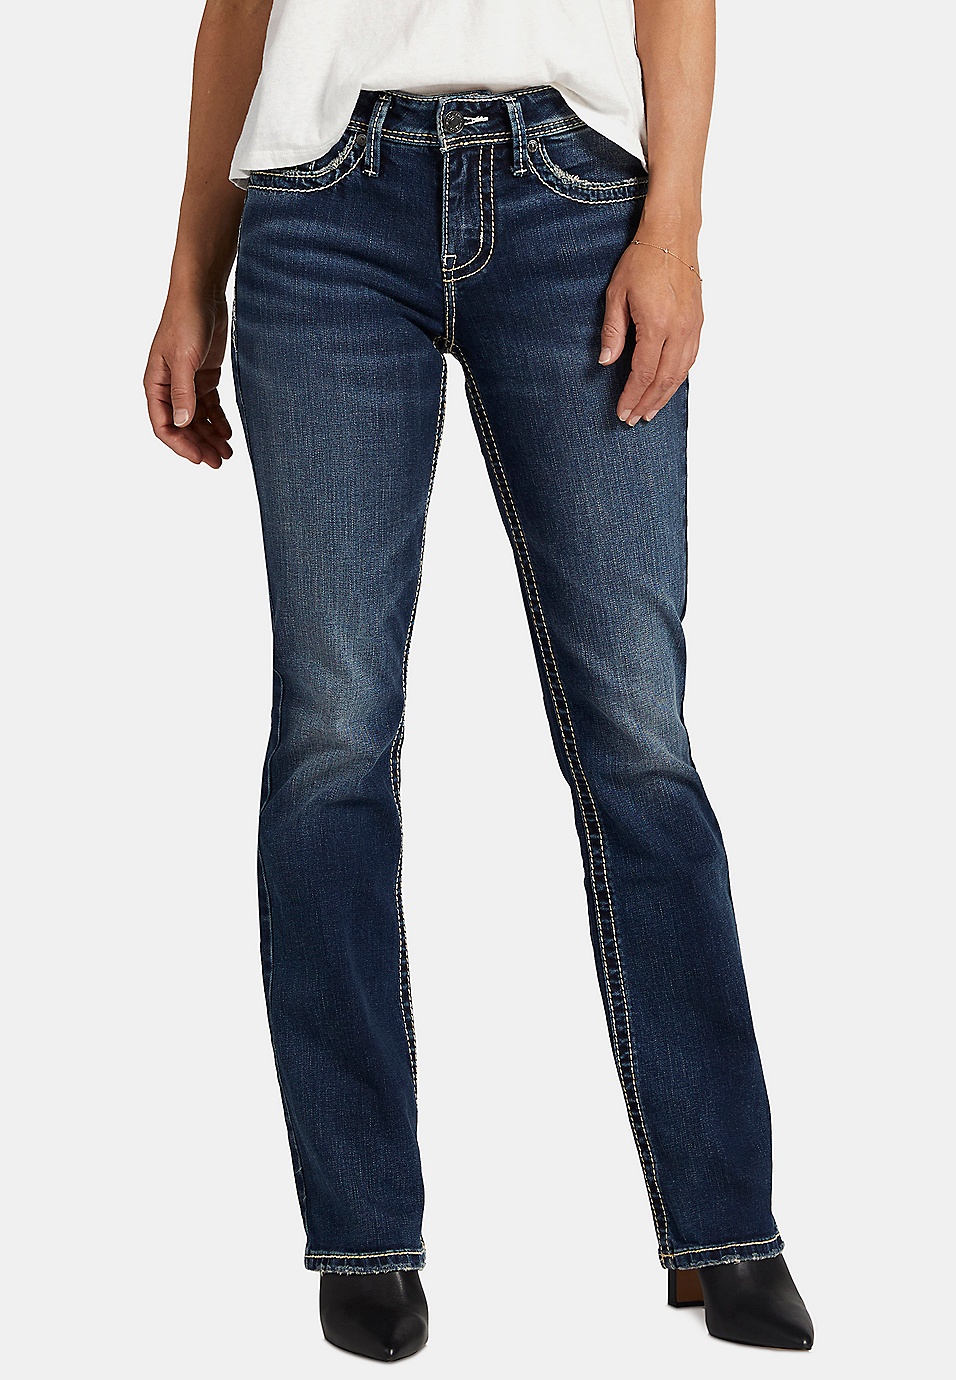 Silver Jeans Co.® Suki Slim Boot Curvy Mid Rise Jean